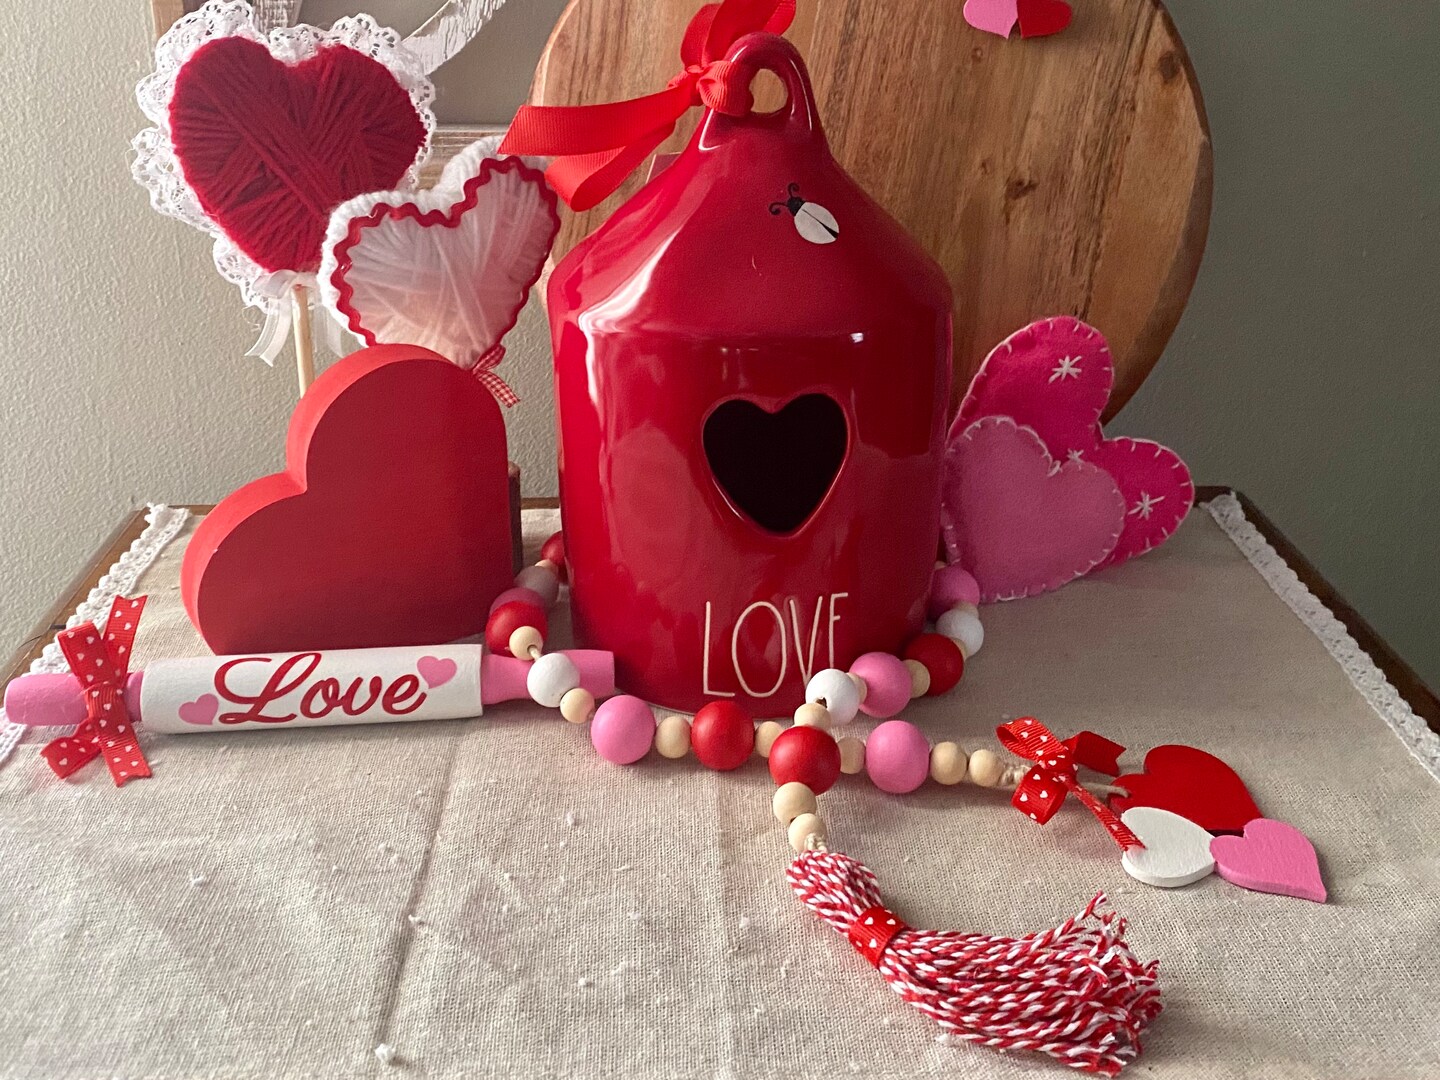 Valentines Day Beads Heart Farmhouse Valentines Decor Tiered Tray Decor  farmhouse Decor gift Tag Valentine Gift 